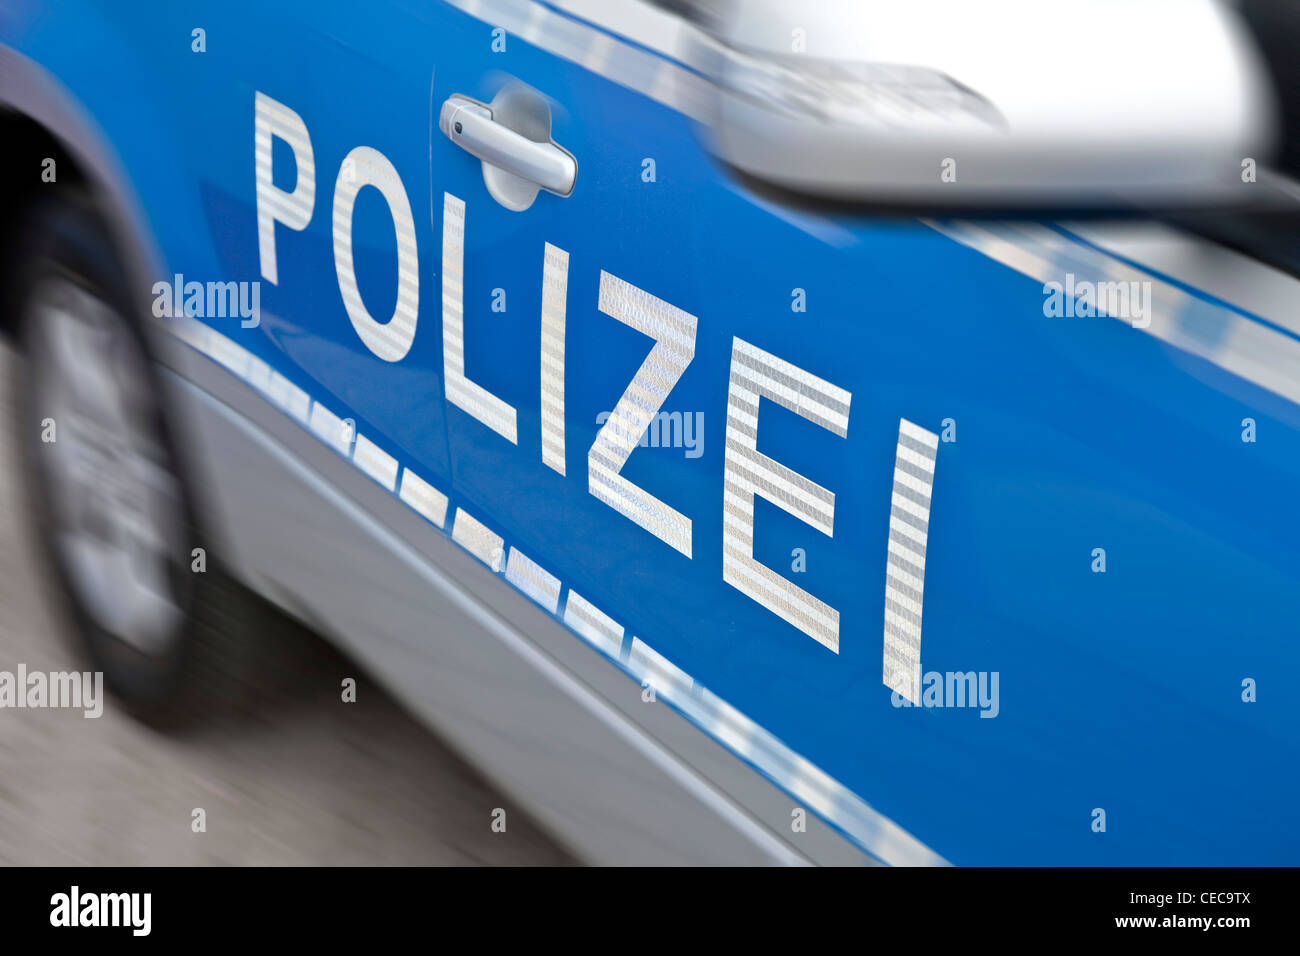 Voiture de police en allemagne - voiture de police allemand Banque D'Images